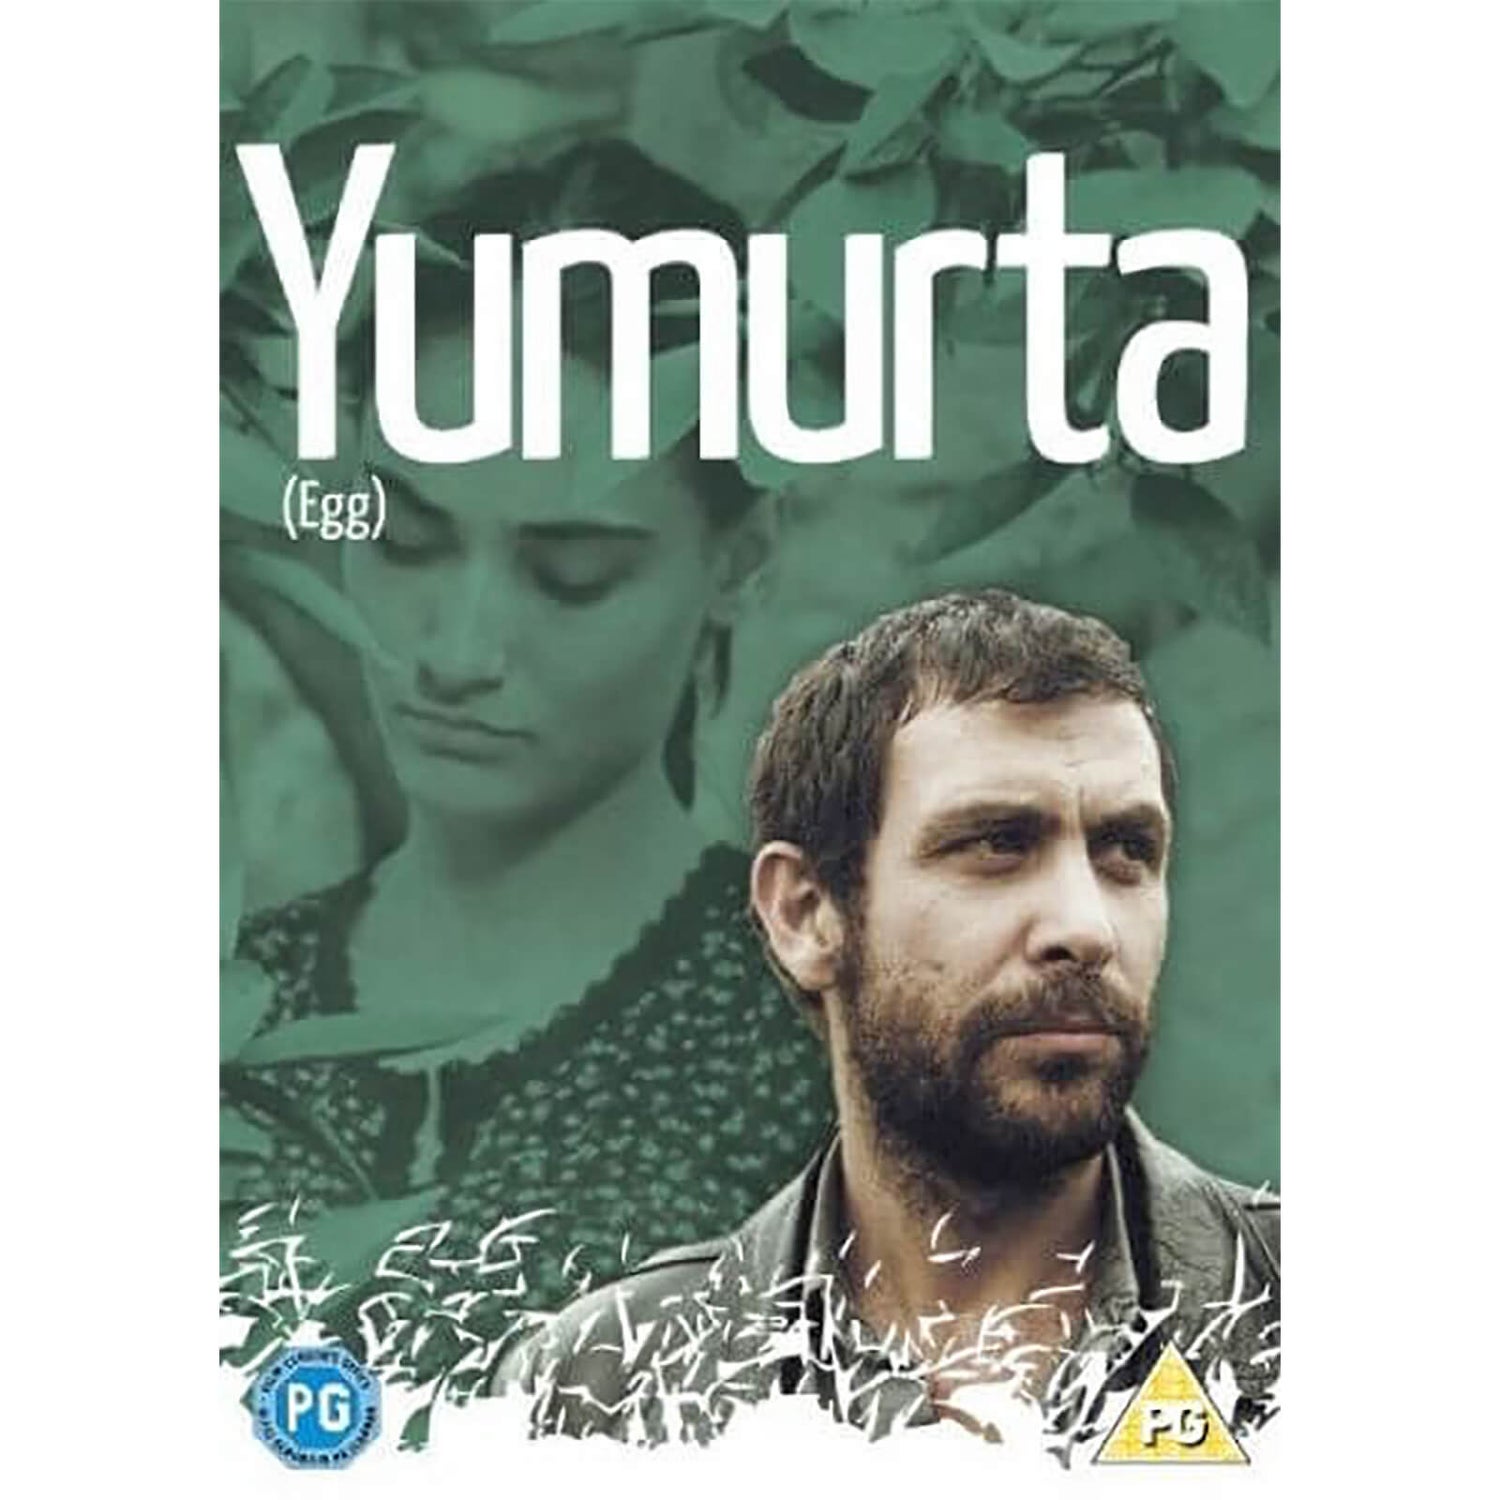 Yumatra (Egg)